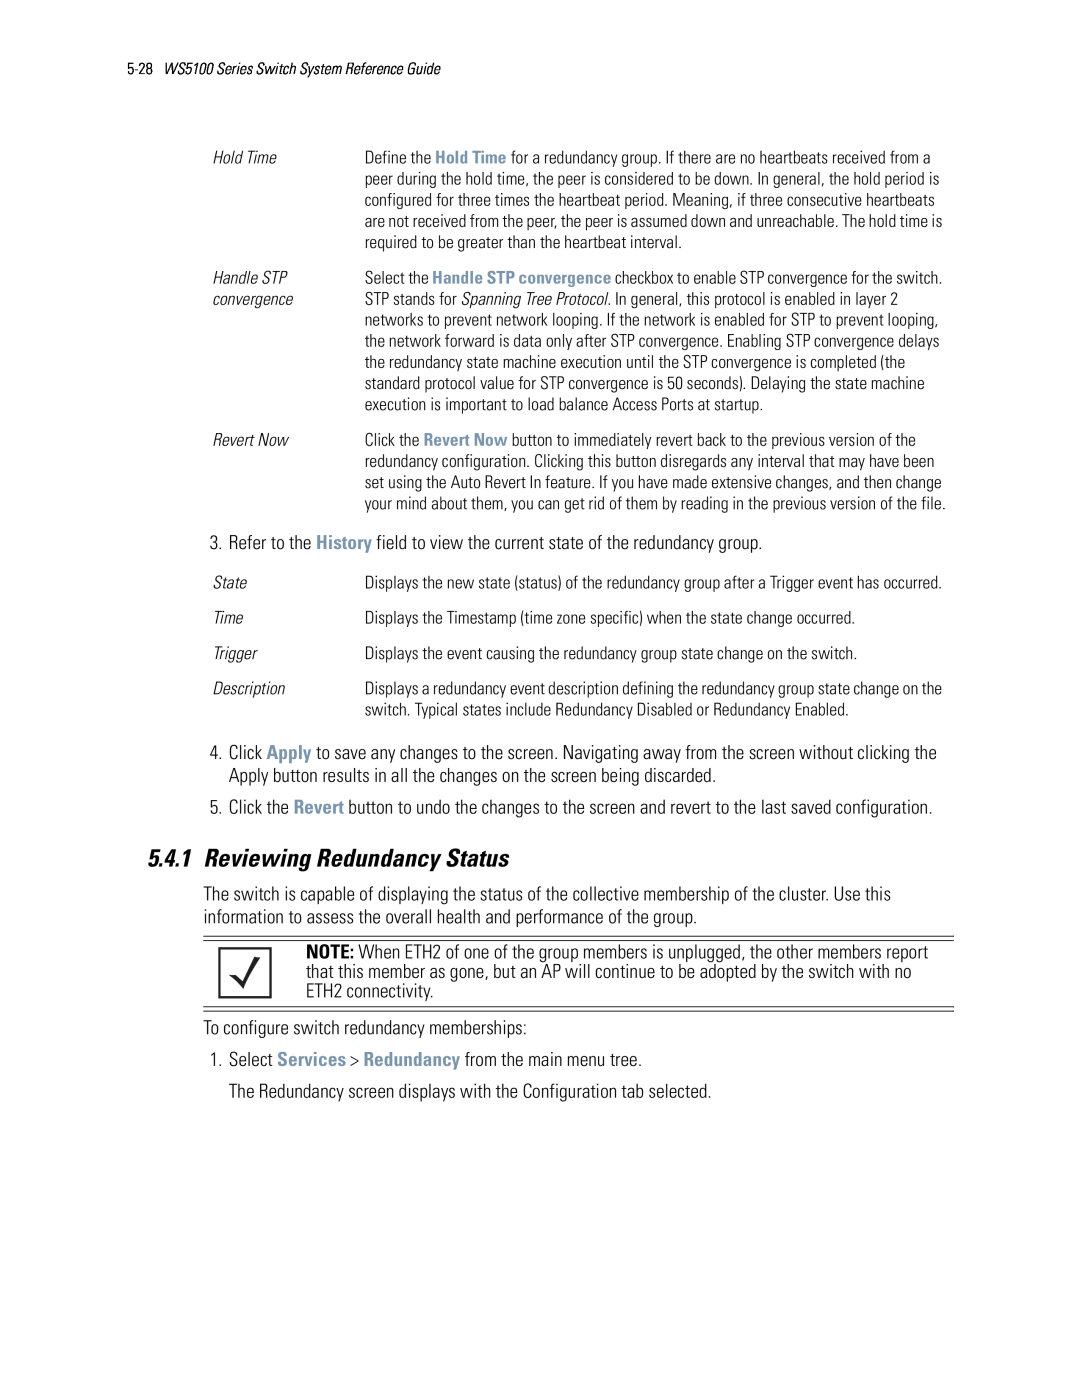 Motorola WS5100 manual 5.4.1Reviewing Redundancy Status 